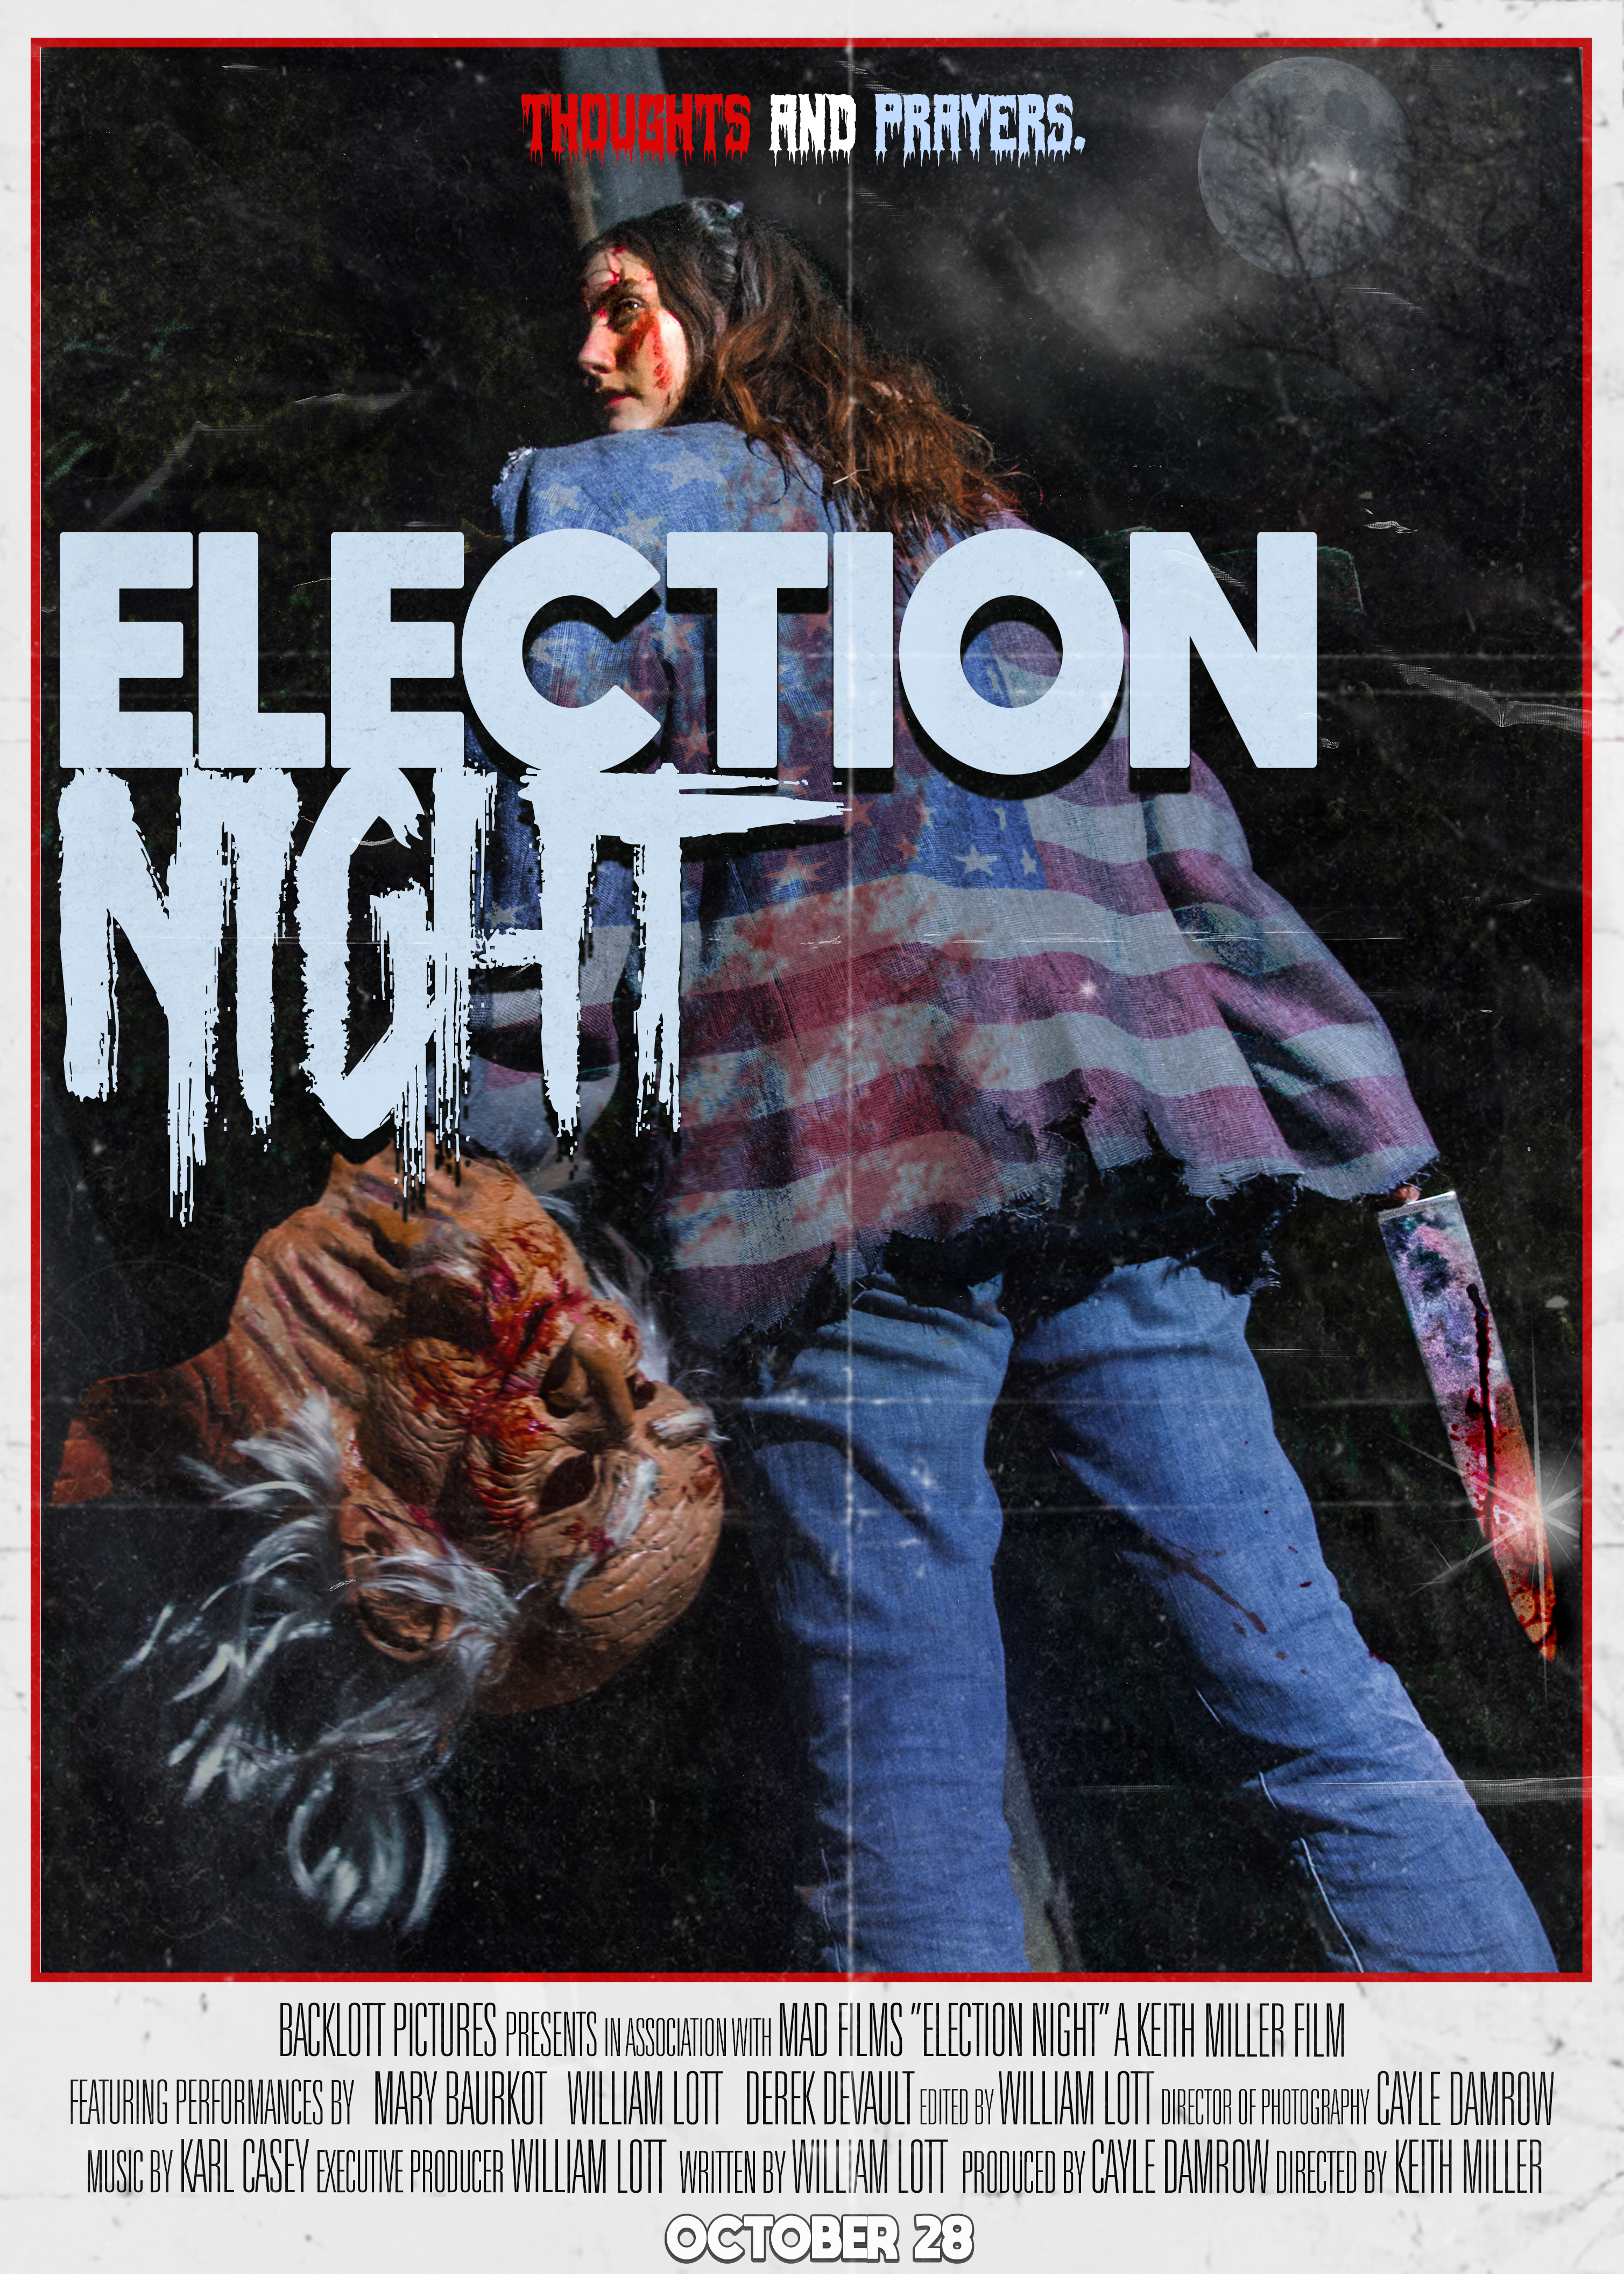 Election Night (2020)